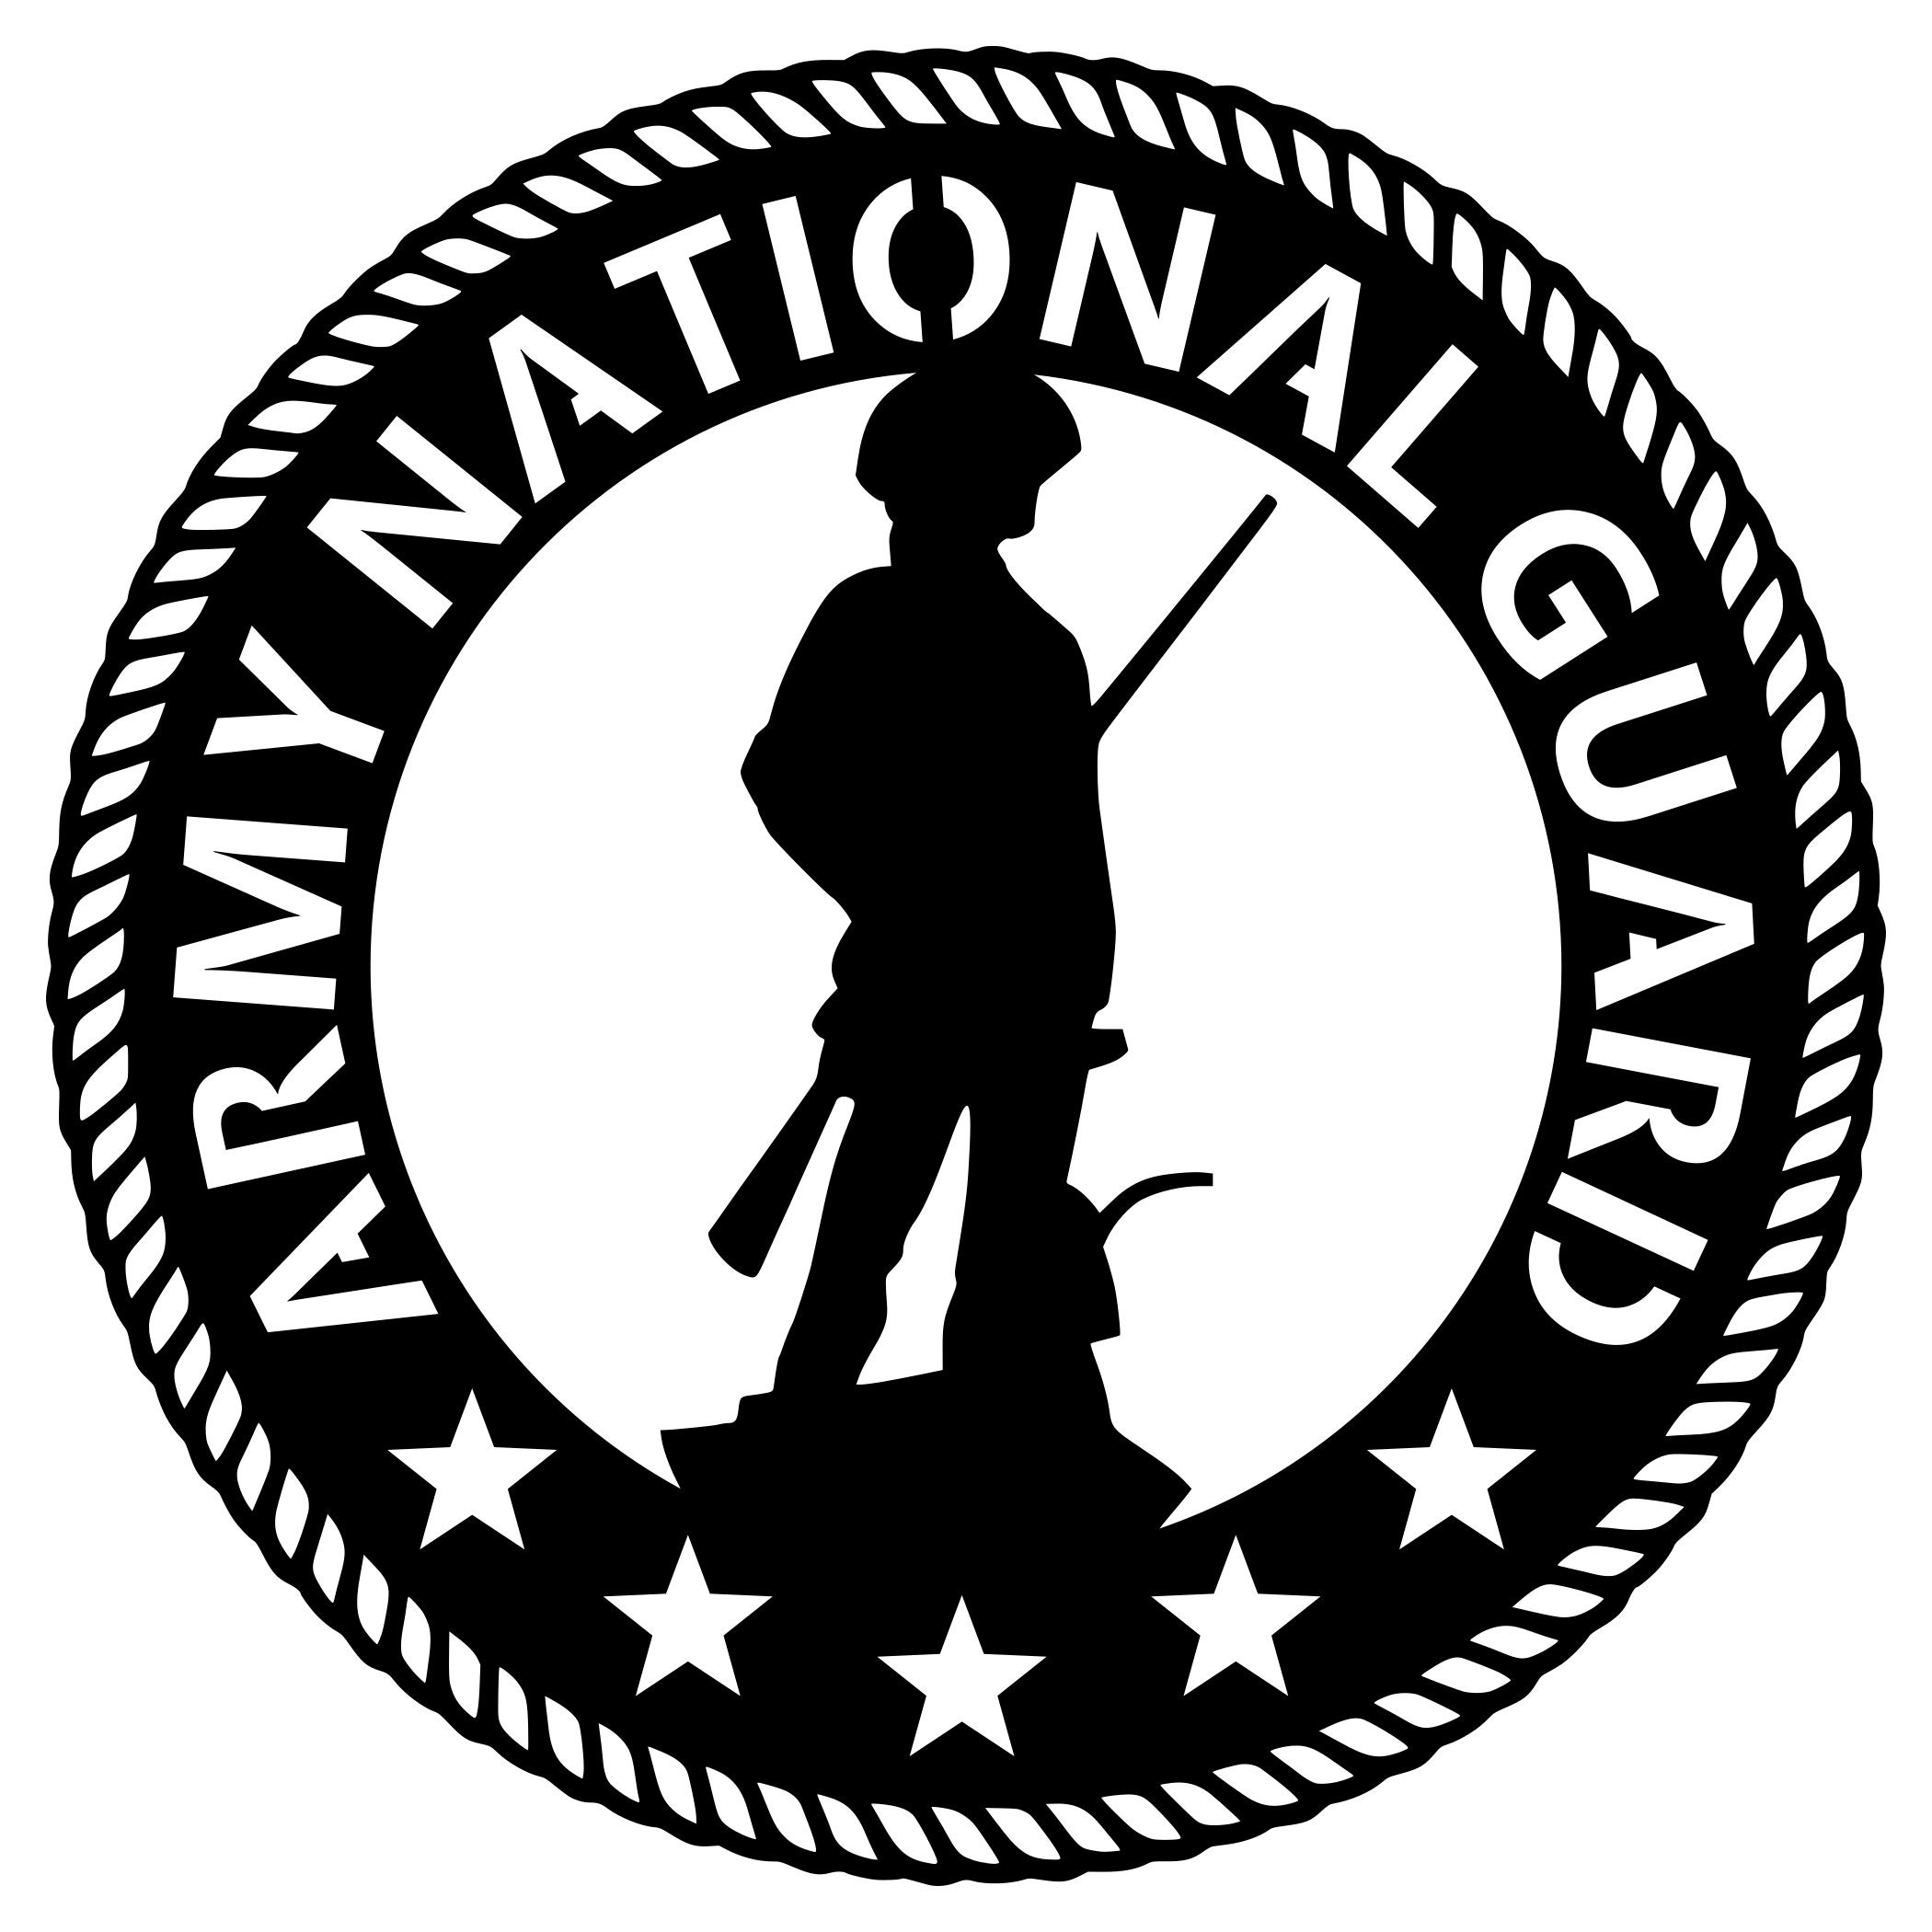 US National Guard Digital Download, Svg Png Dxf Files - Etsy